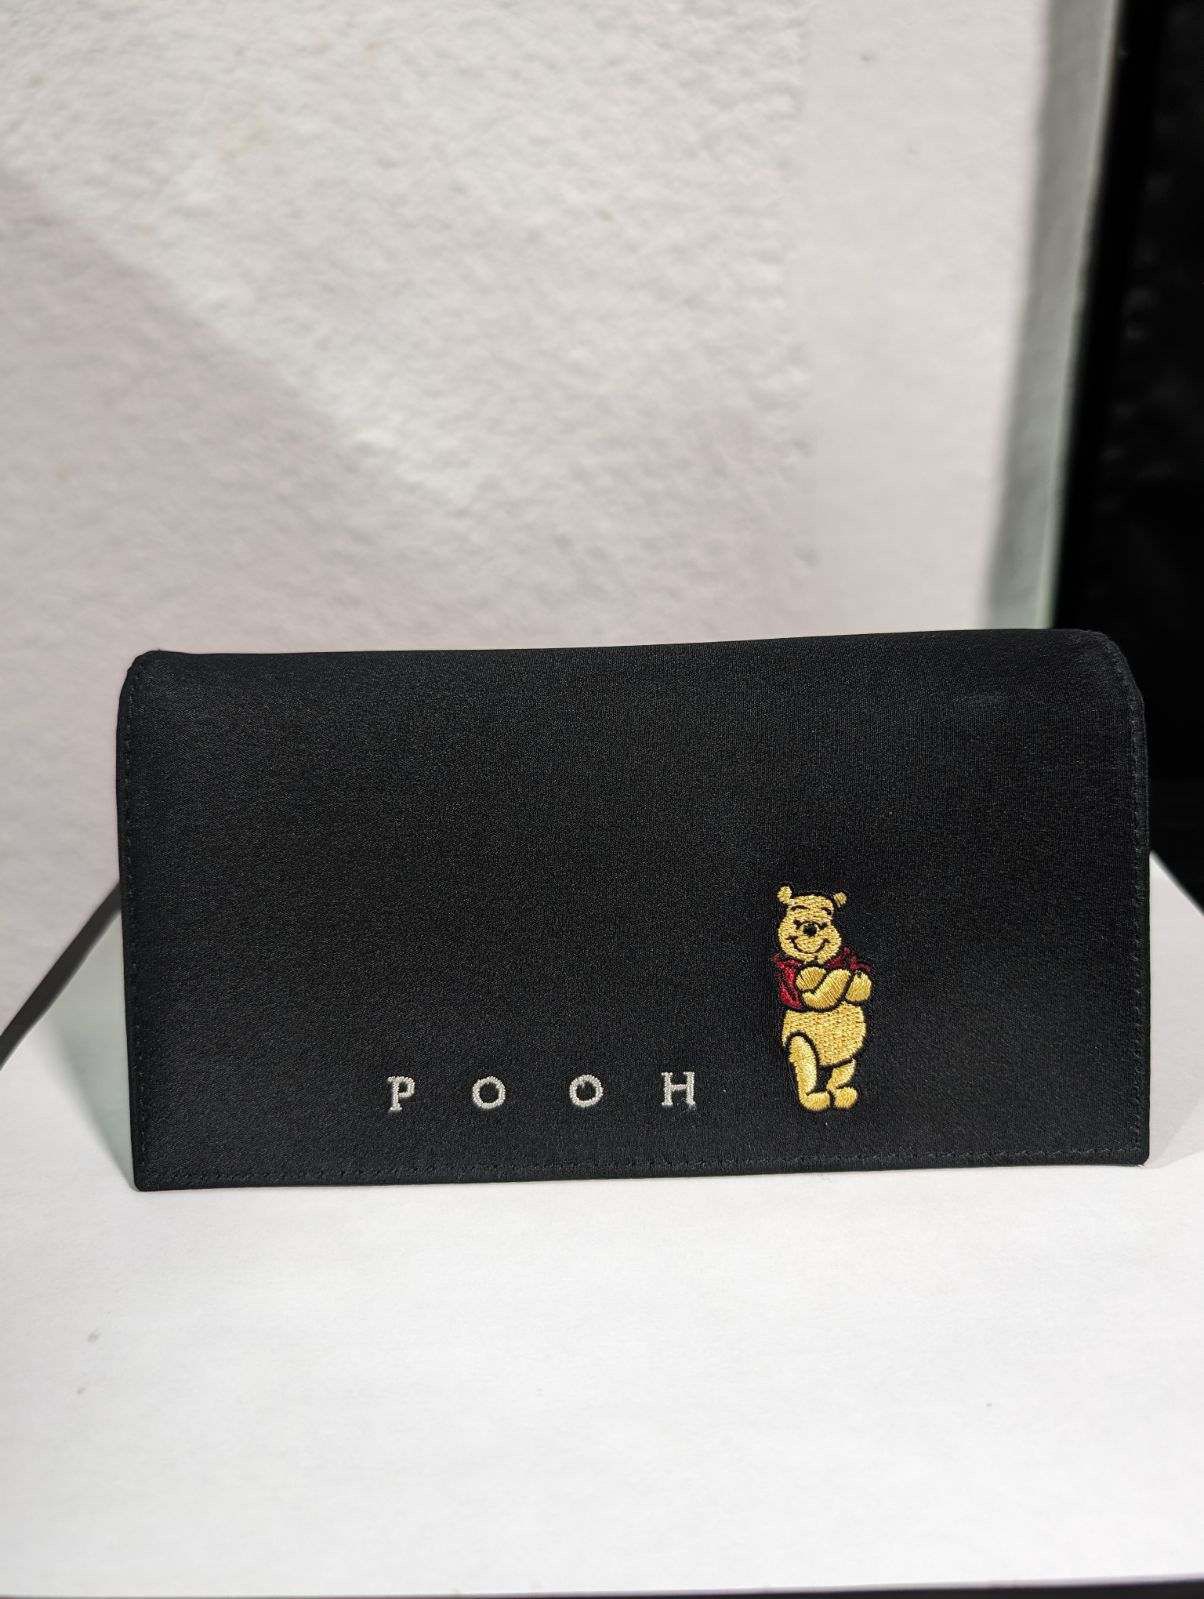 Pooh Wallet 